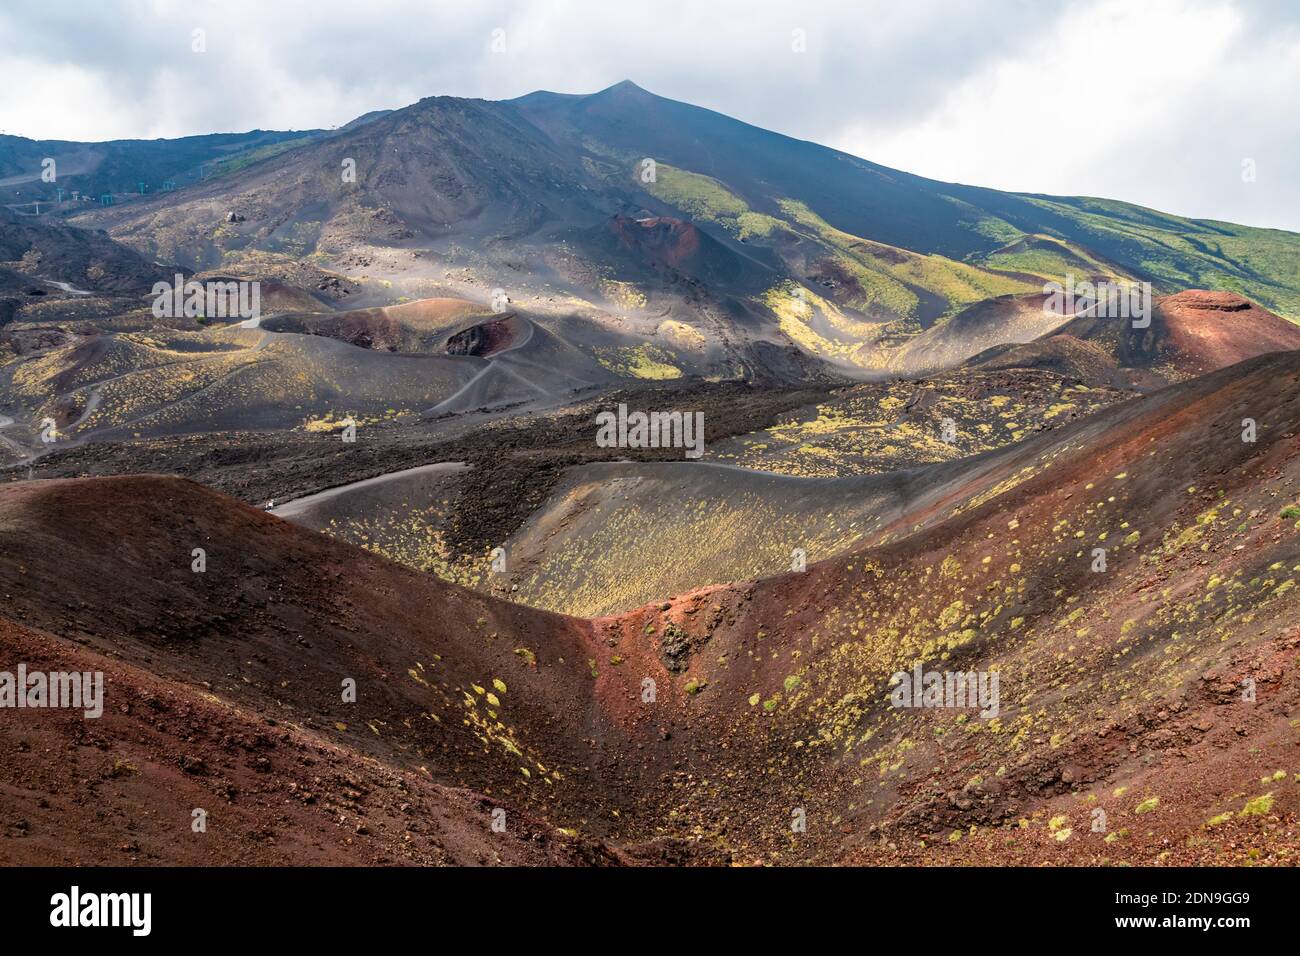 Mount Etna volcanic landscape and its typical vegetation, Sicily Stock Photo